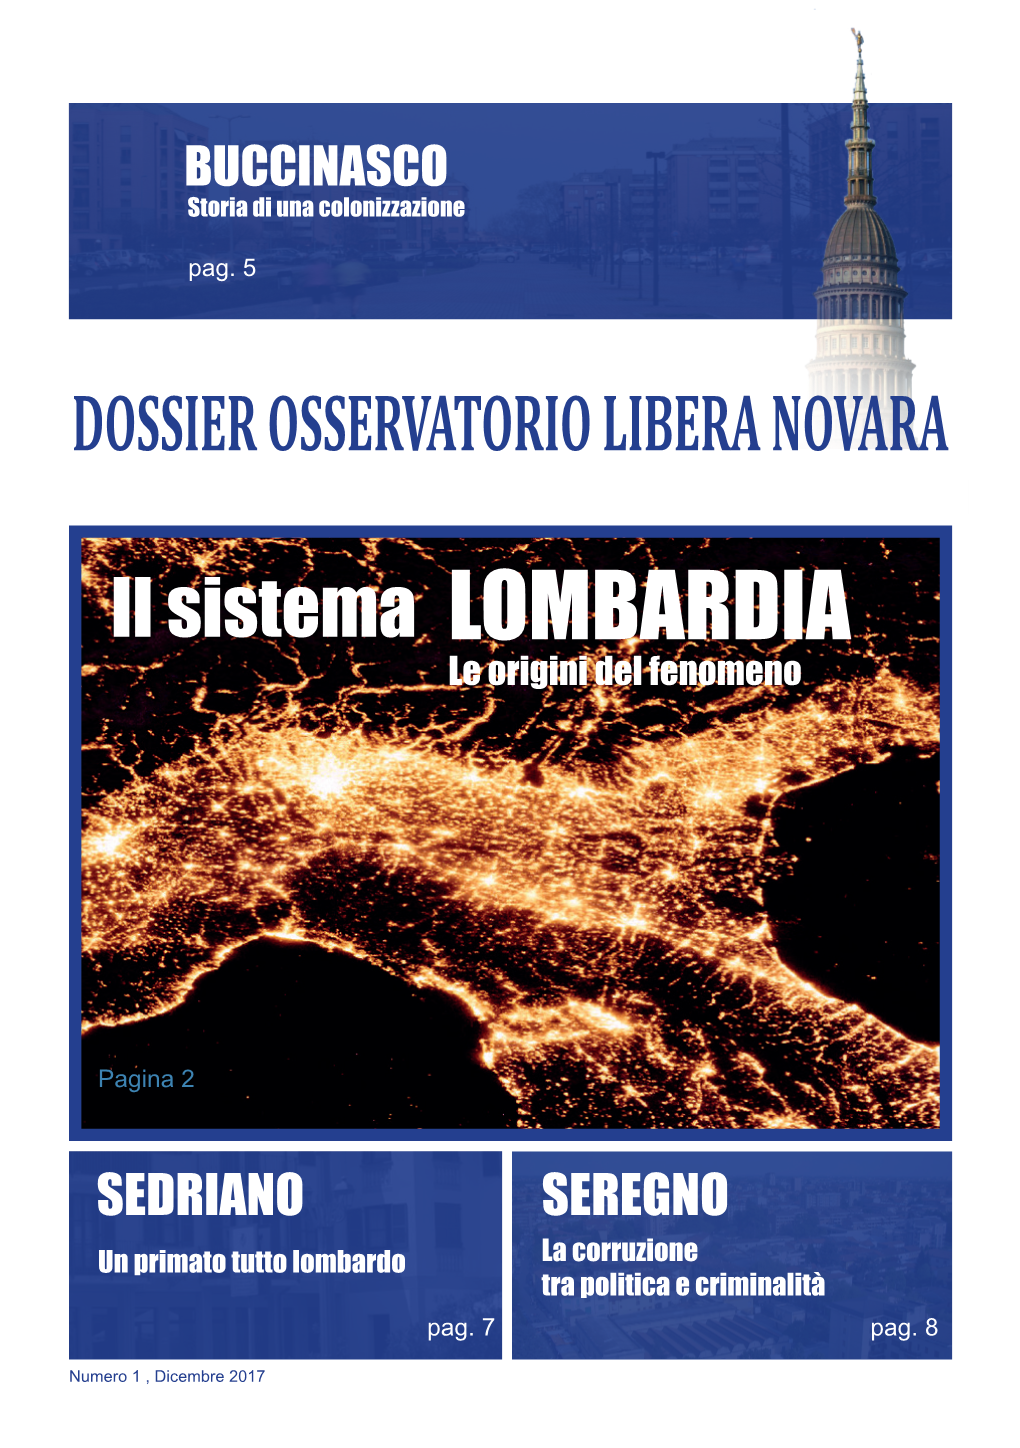 Dossier Osservatorio Libera Novara